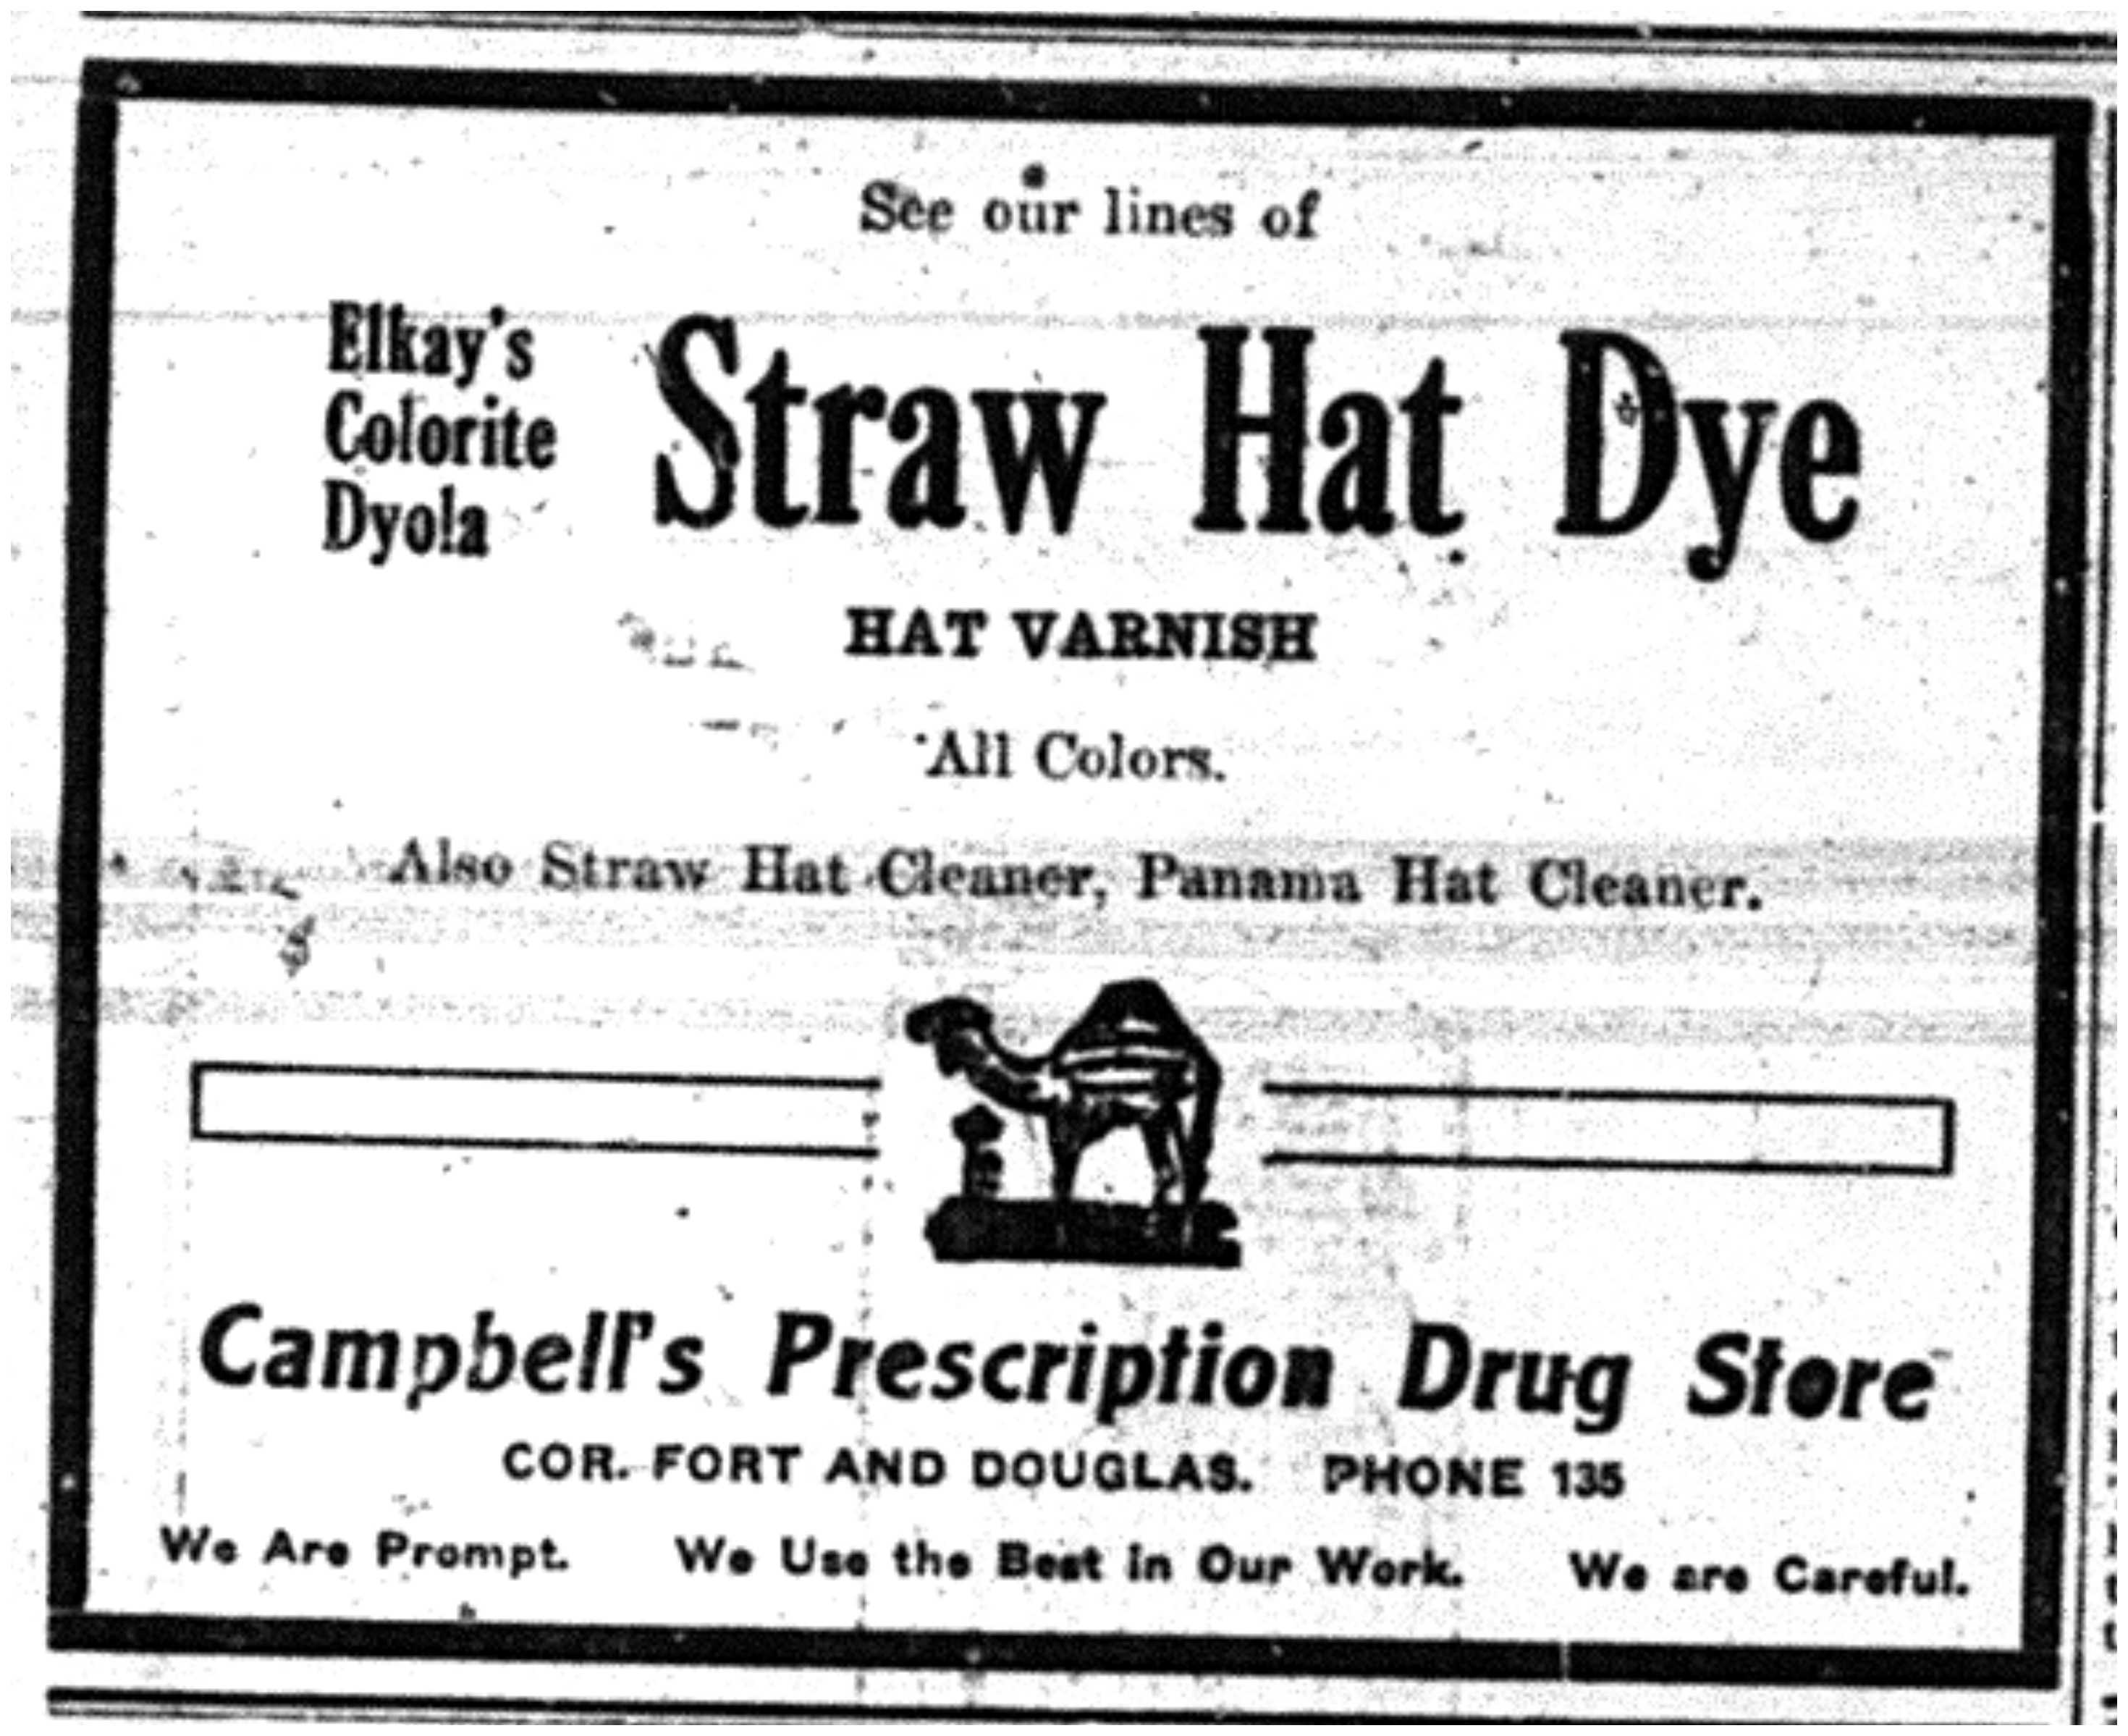 "Straw Hat Dye"